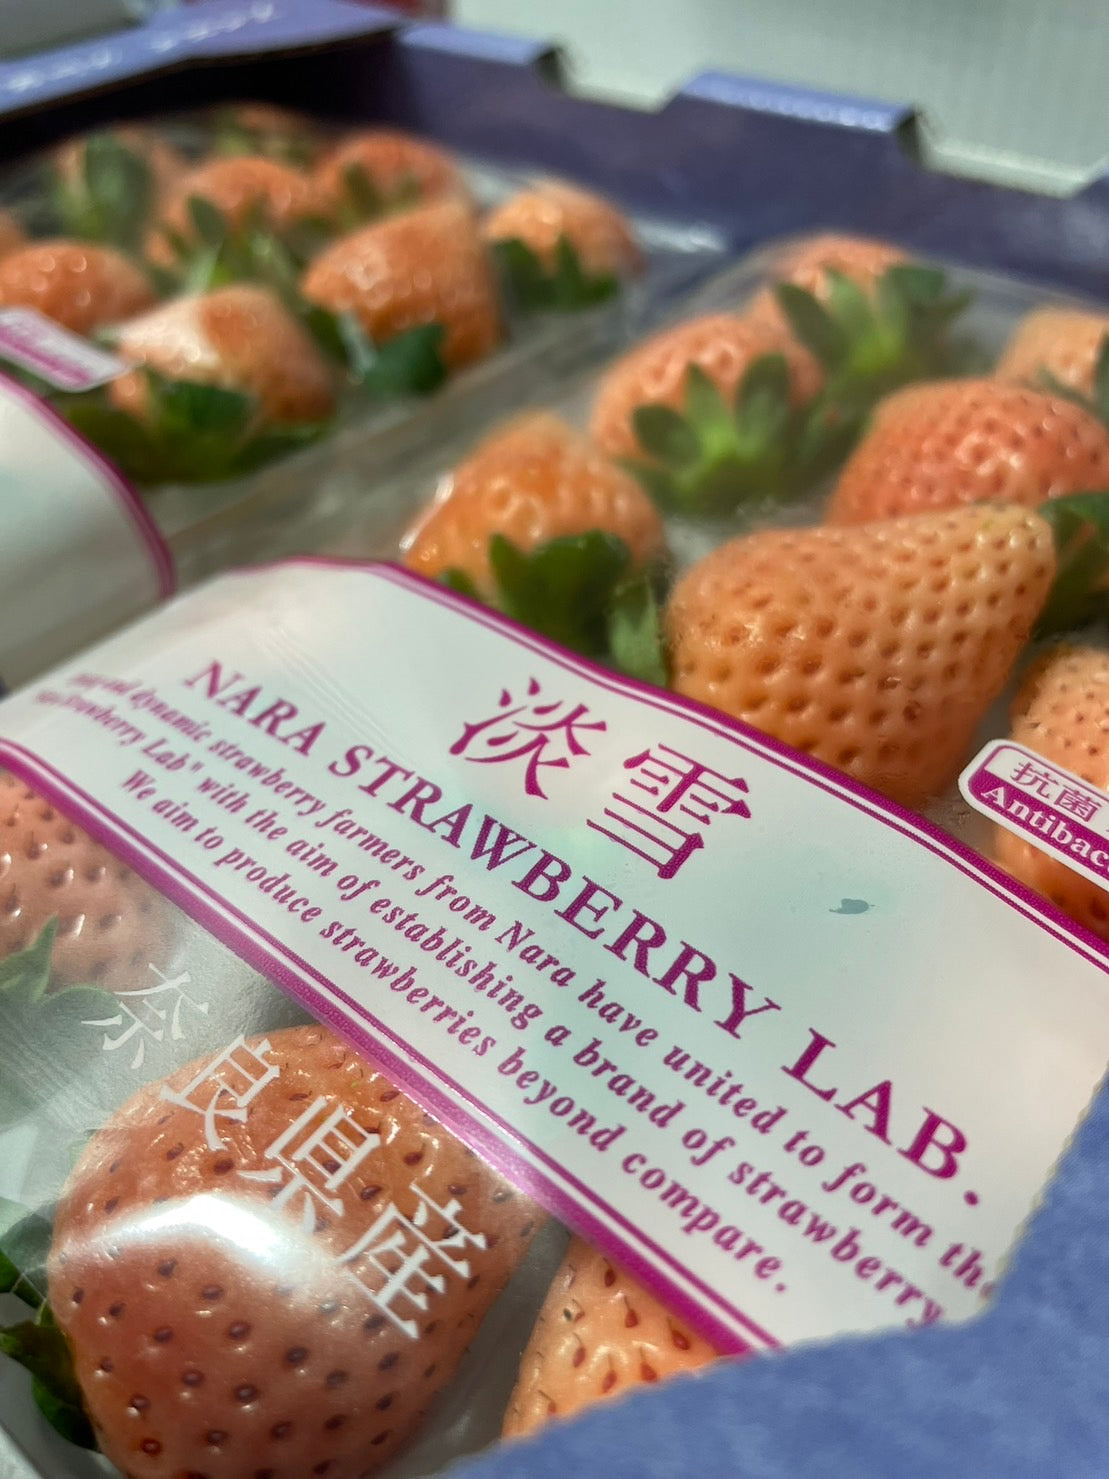 White Japanese Strawberry "Awa Yuki" 淡雪 270g with - limited availability